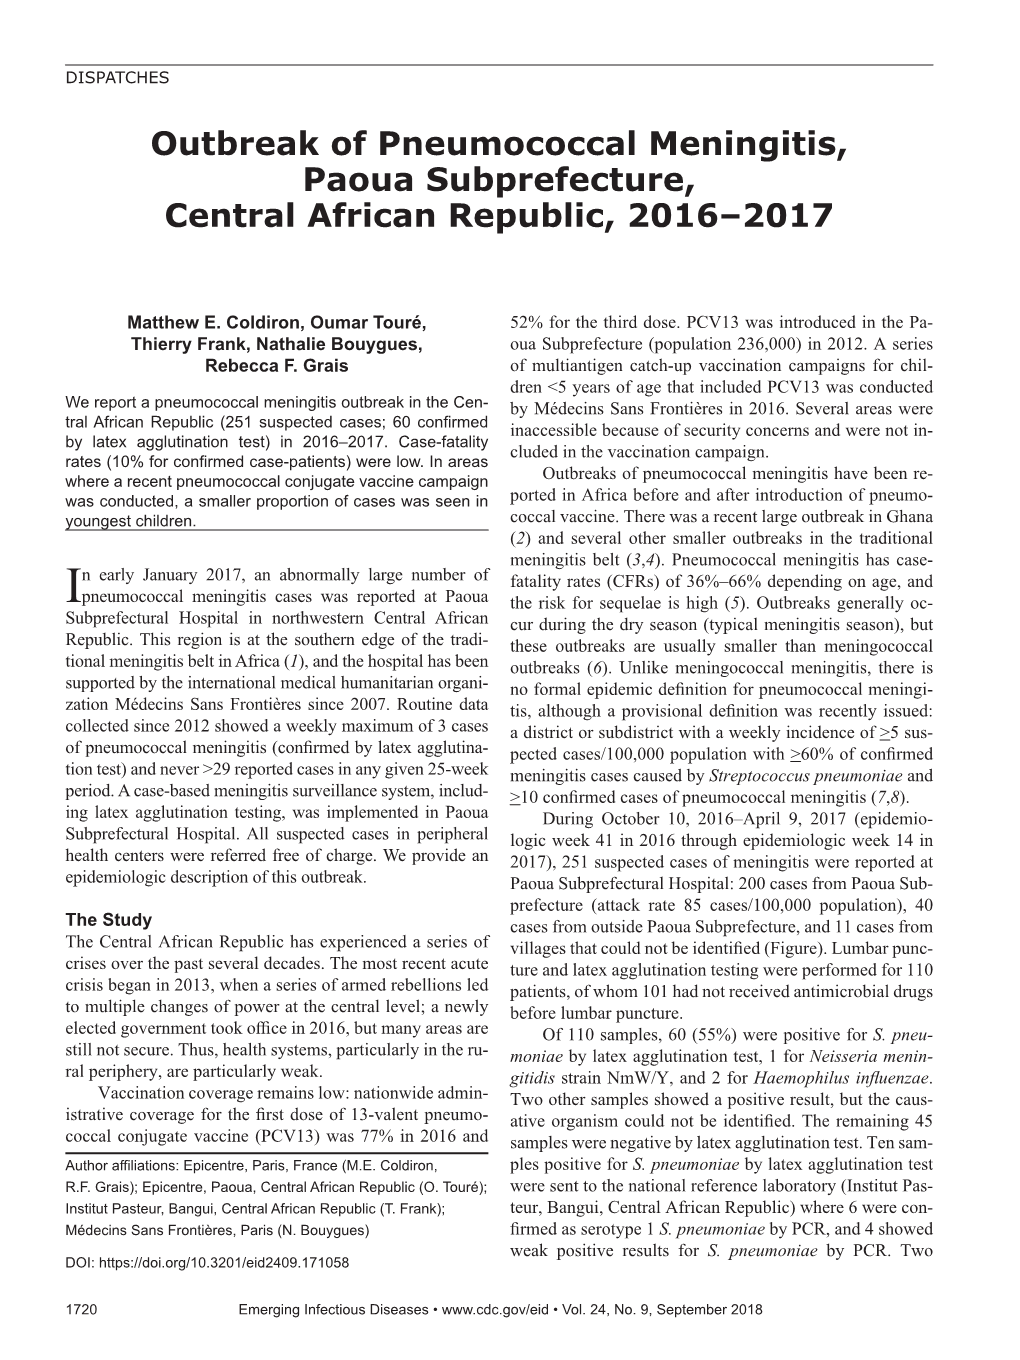 Outbreak of Pneumococcal Meningitis, Paoua Subprefecture, Central African Republic, 2016–2017